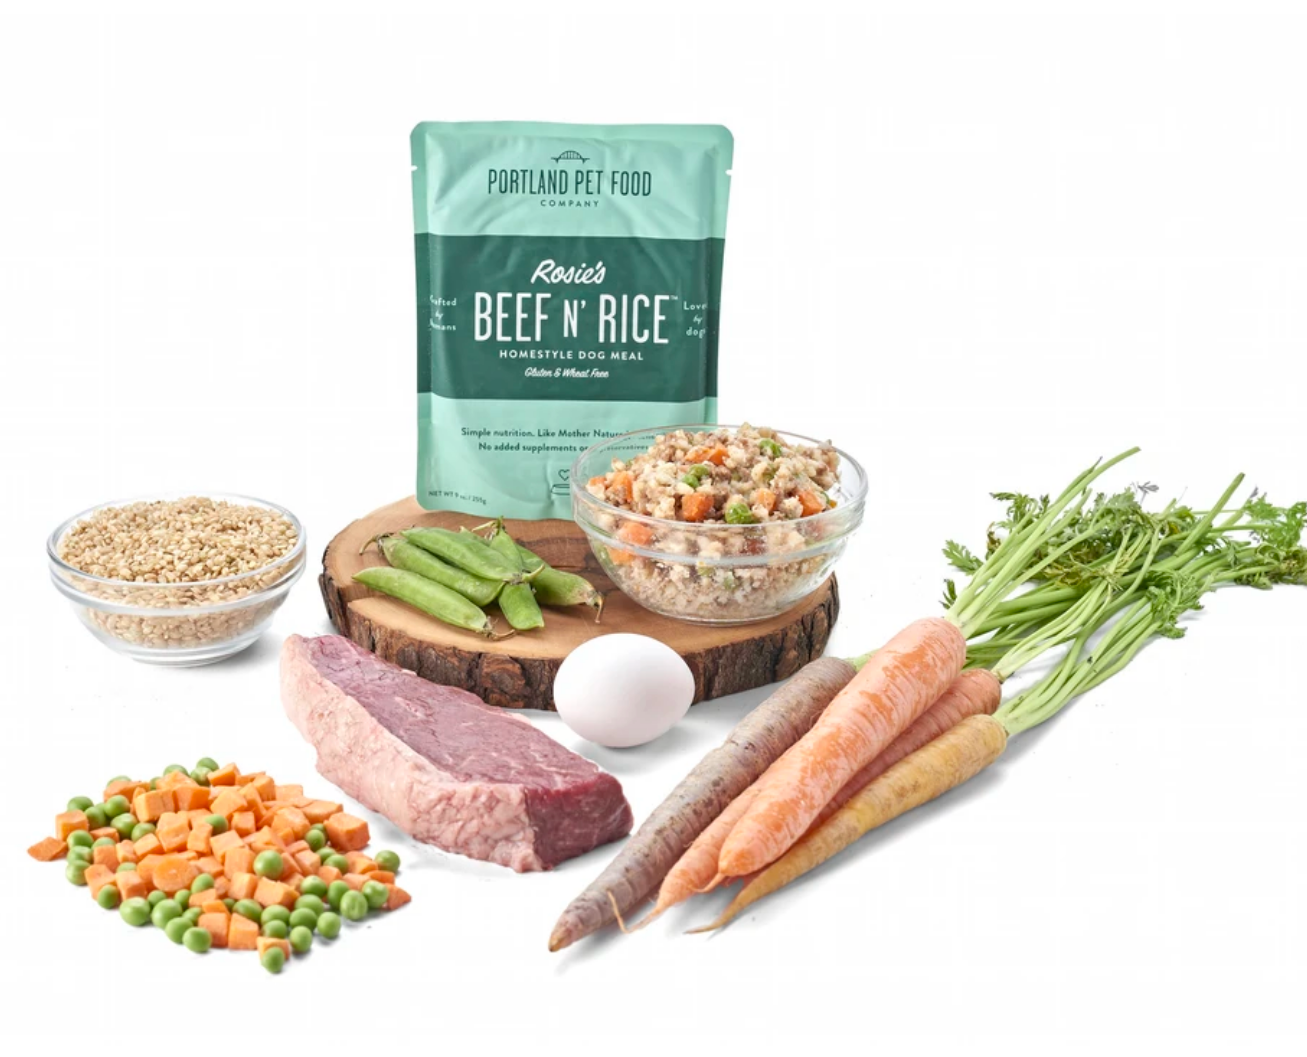 Rosies Beef N' Rice Homestyle Dog Meal promo